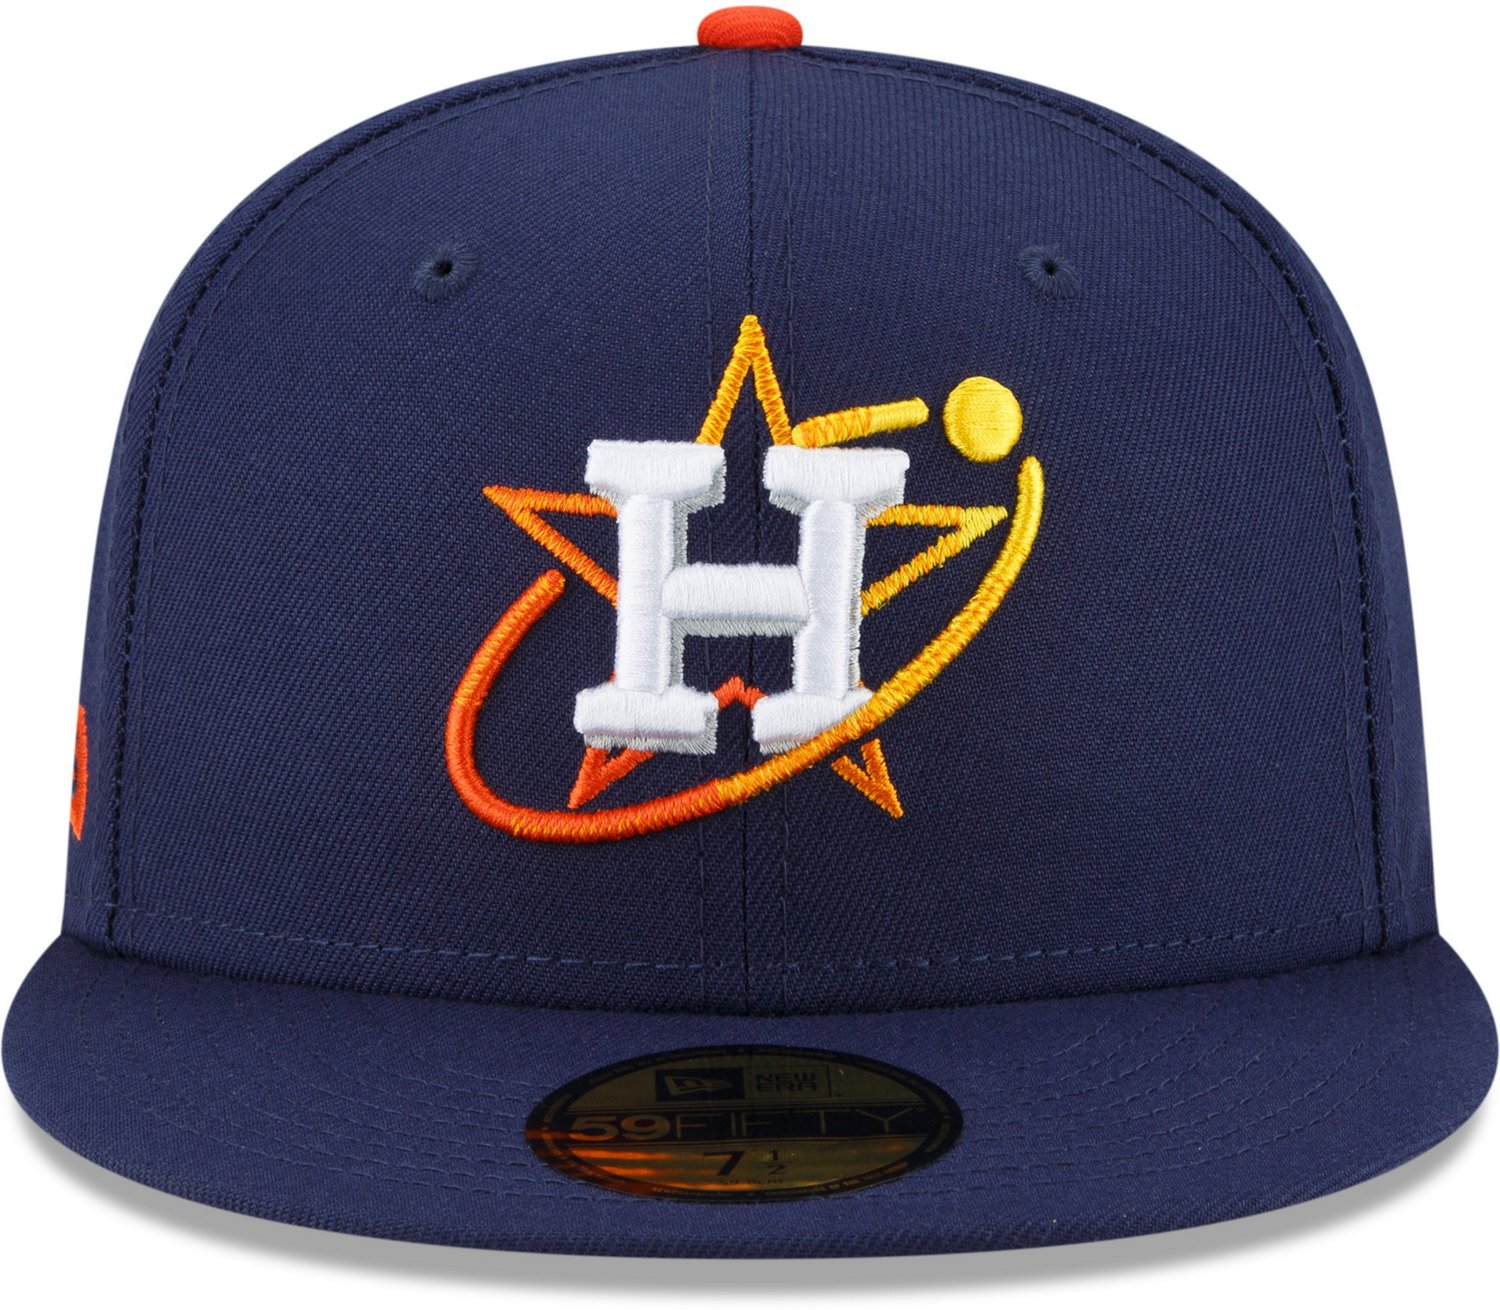 Houston Astros Hats in Houston Astros Team Shop 